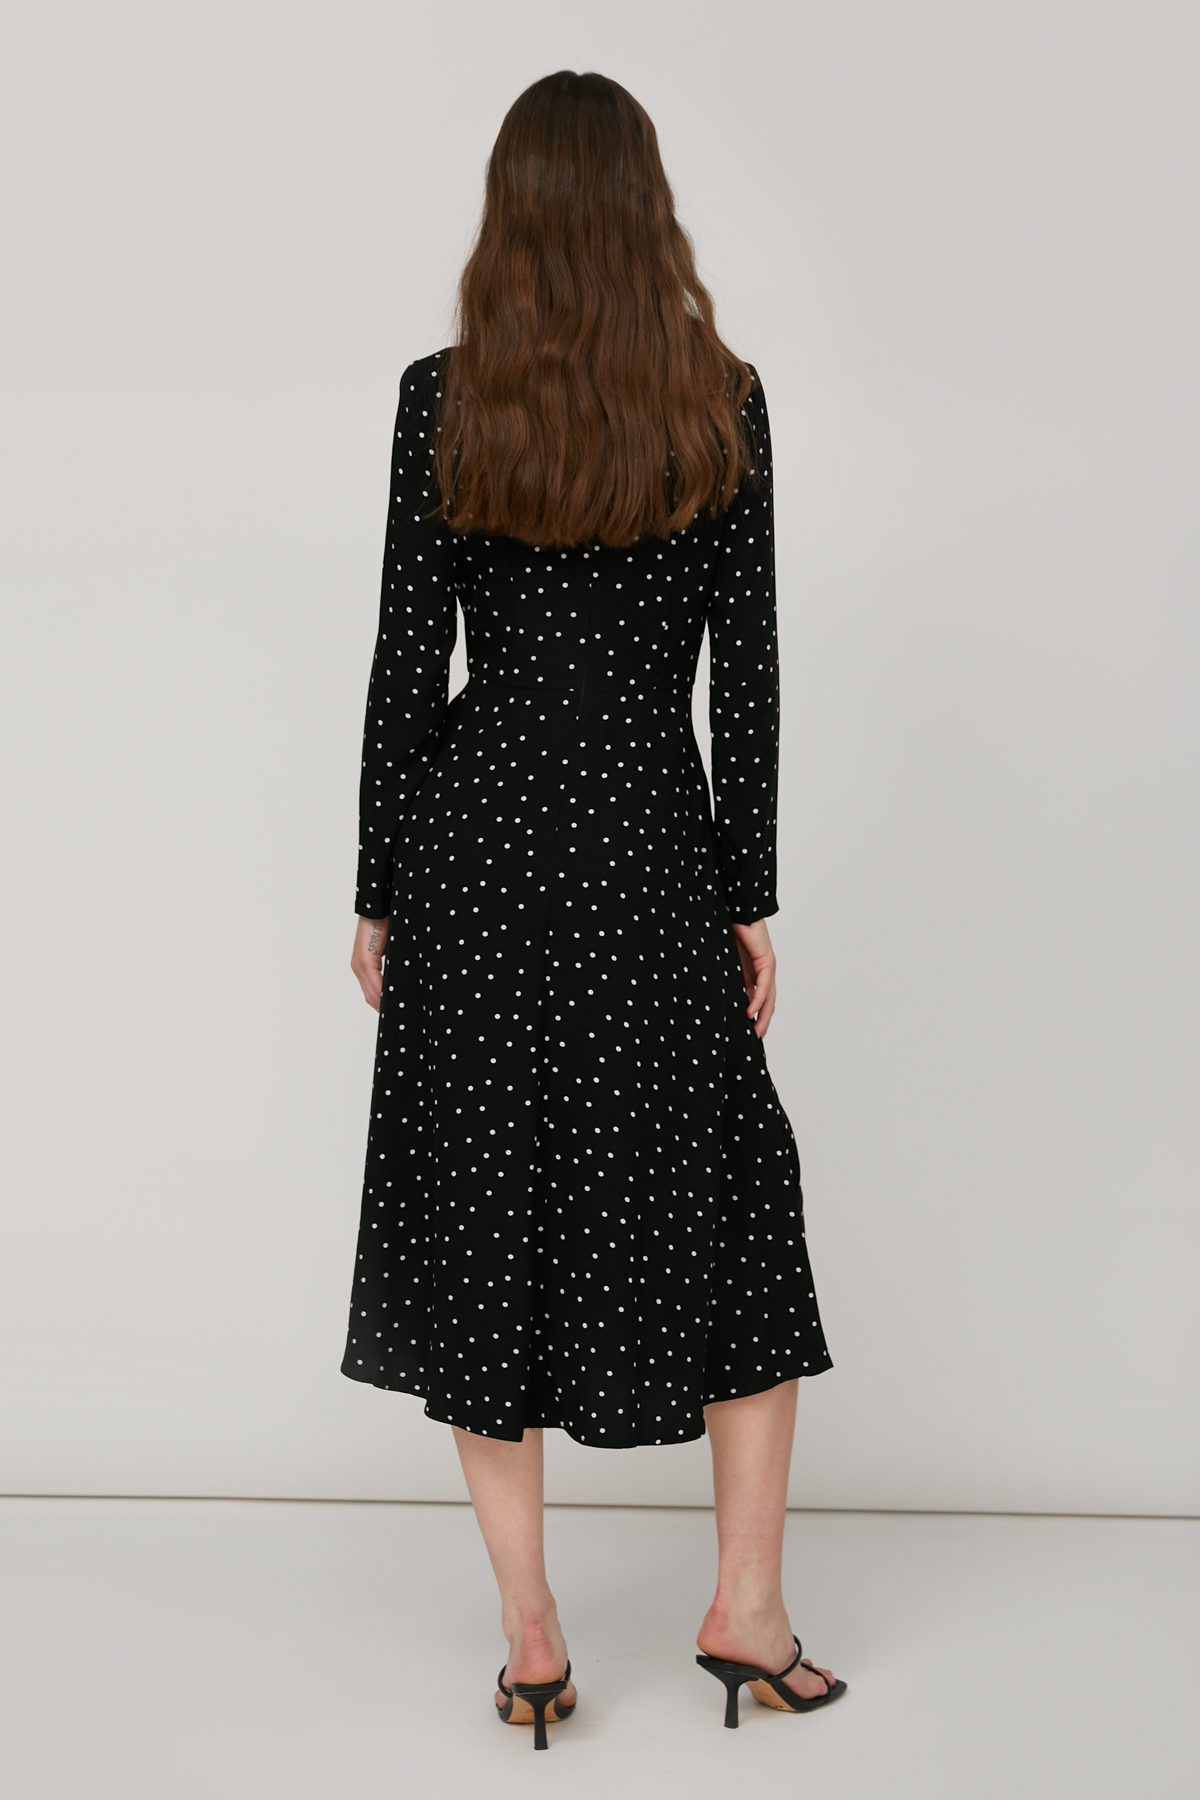 Midi black dress with a white polka dot print , photo 4